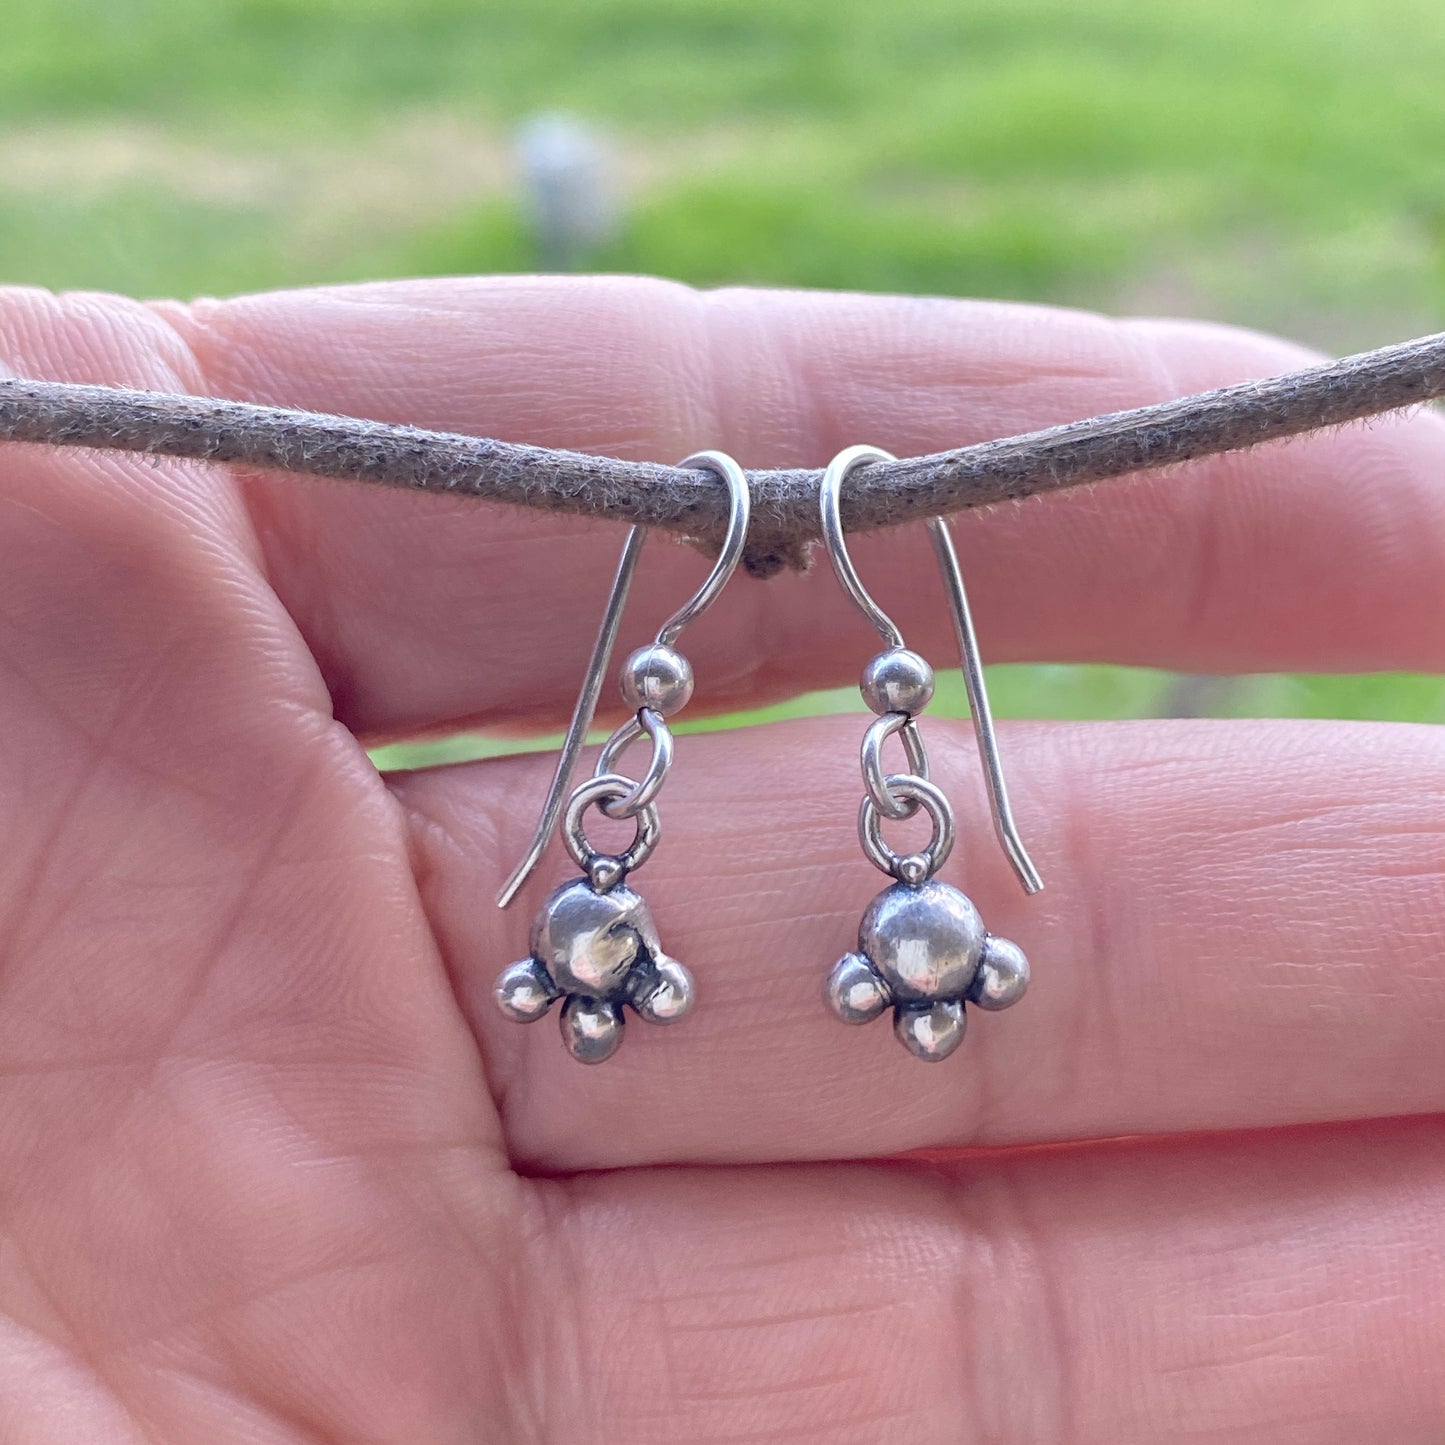 Susiewanna earrings on French hooks